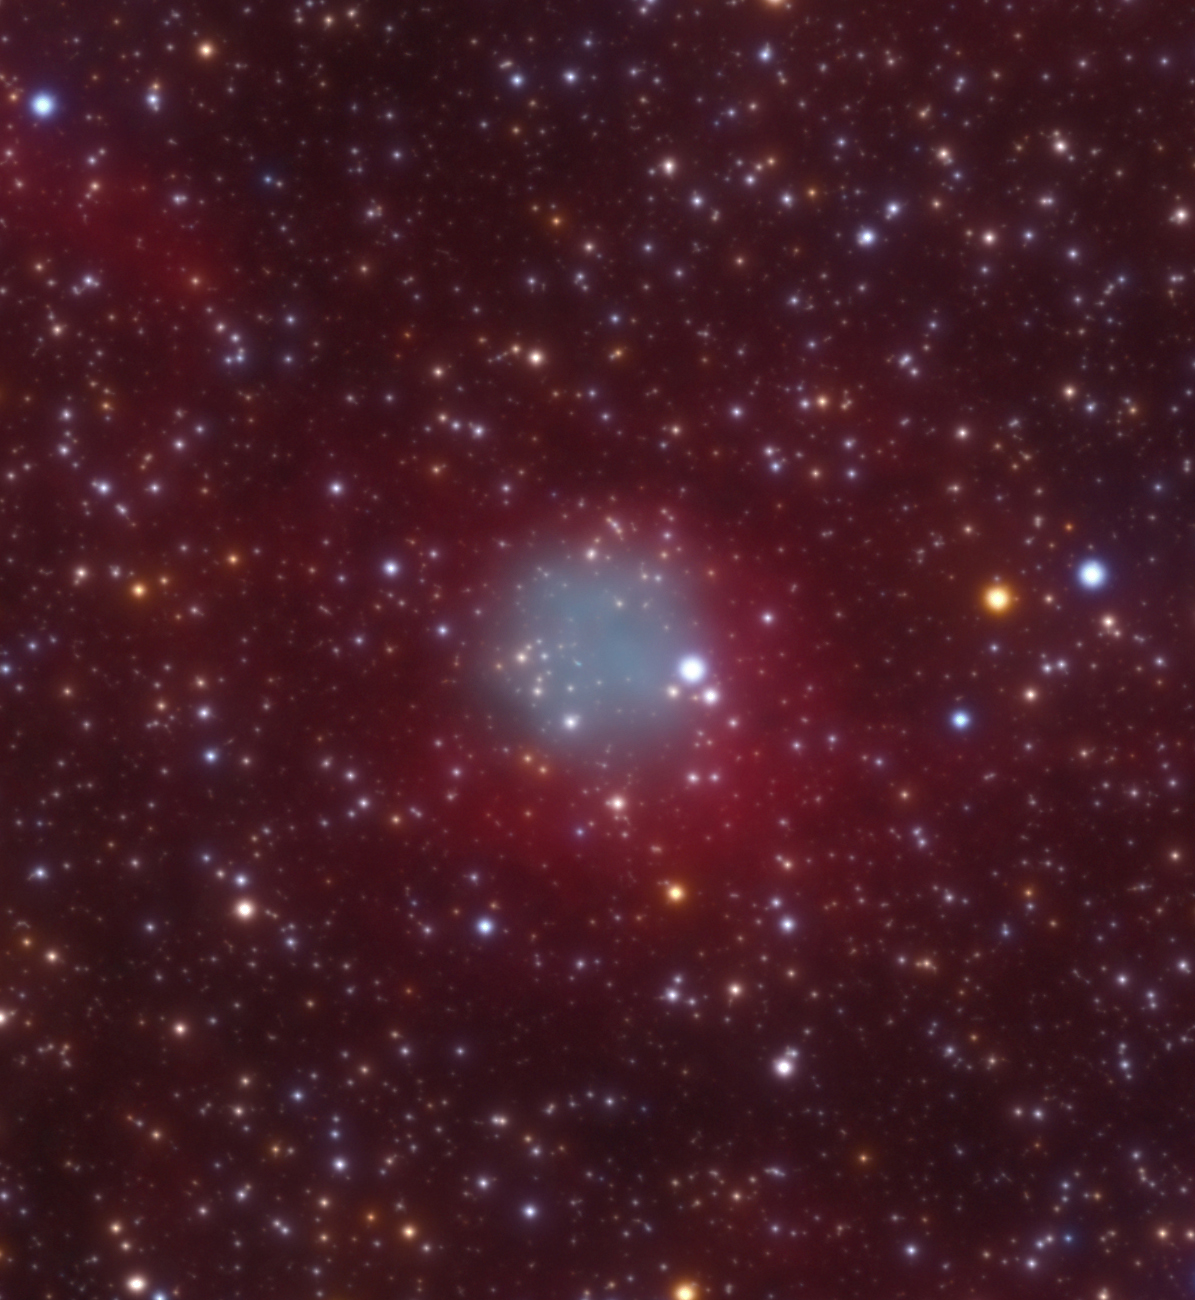 Coppe 1 - The Gen's nebula